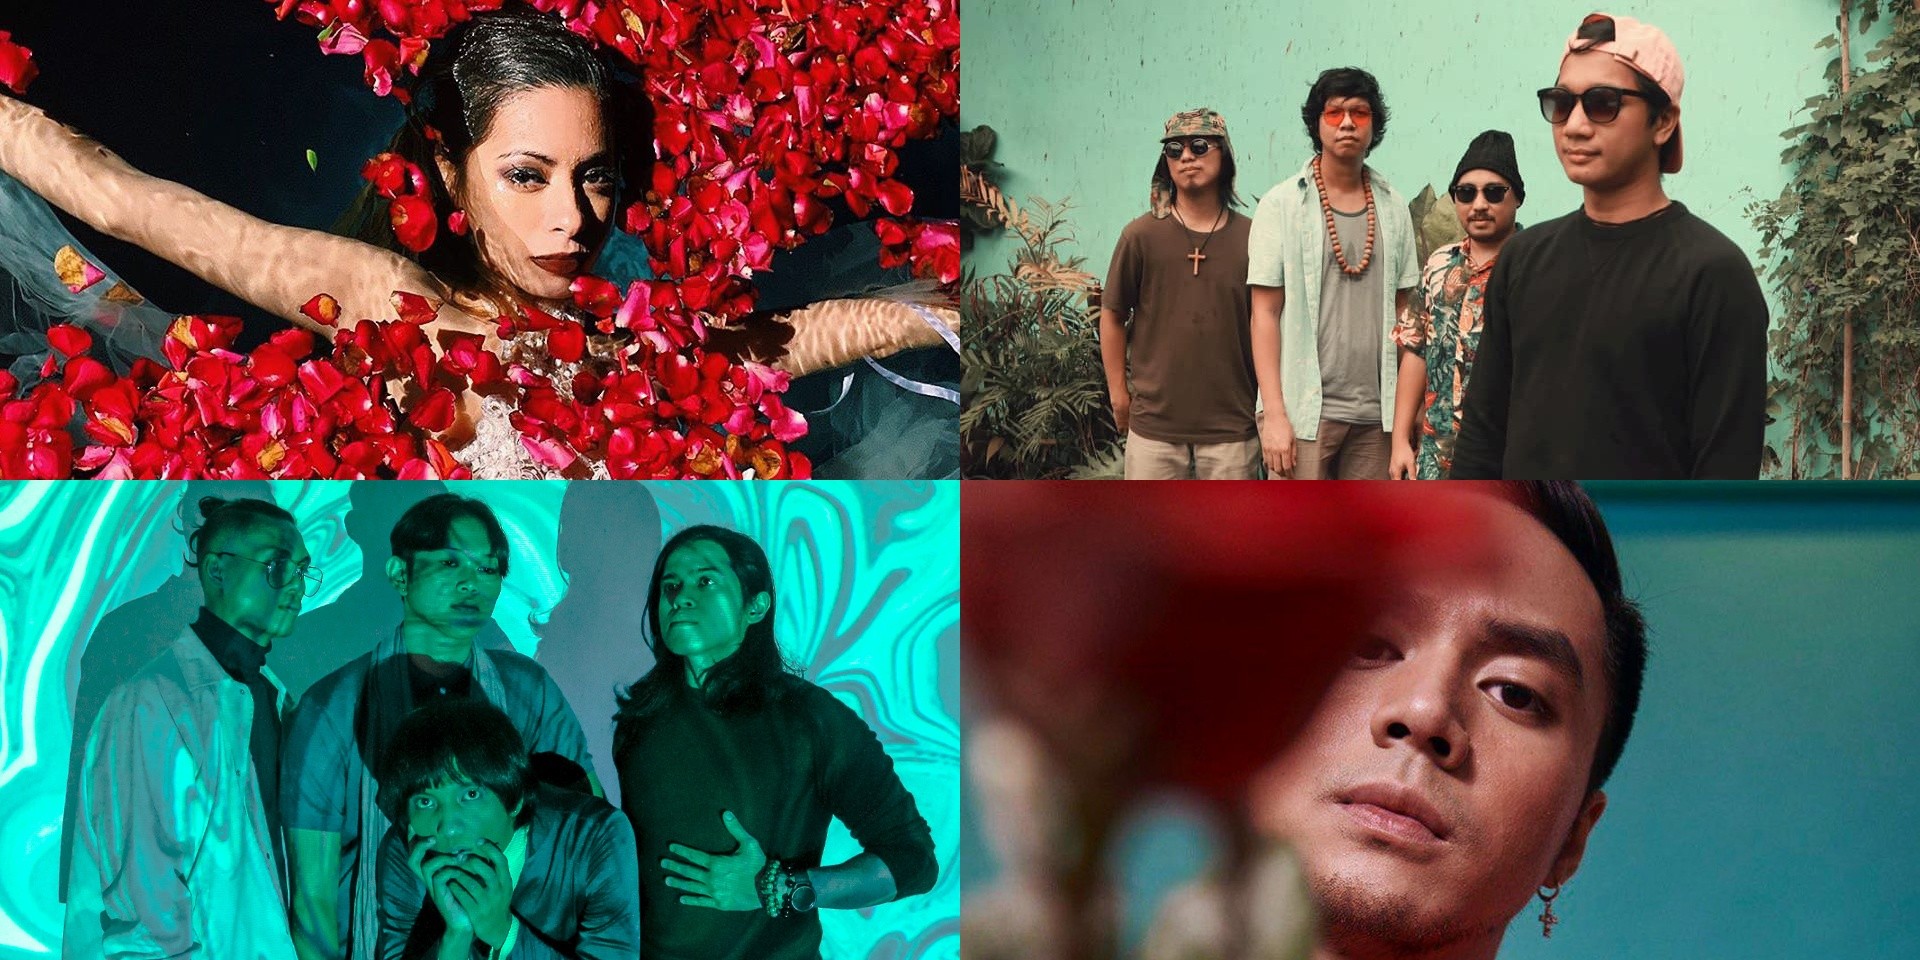 Kat Agarrado, Sam Concepcion, Giniling Festival, Calein, and more release new music – listen